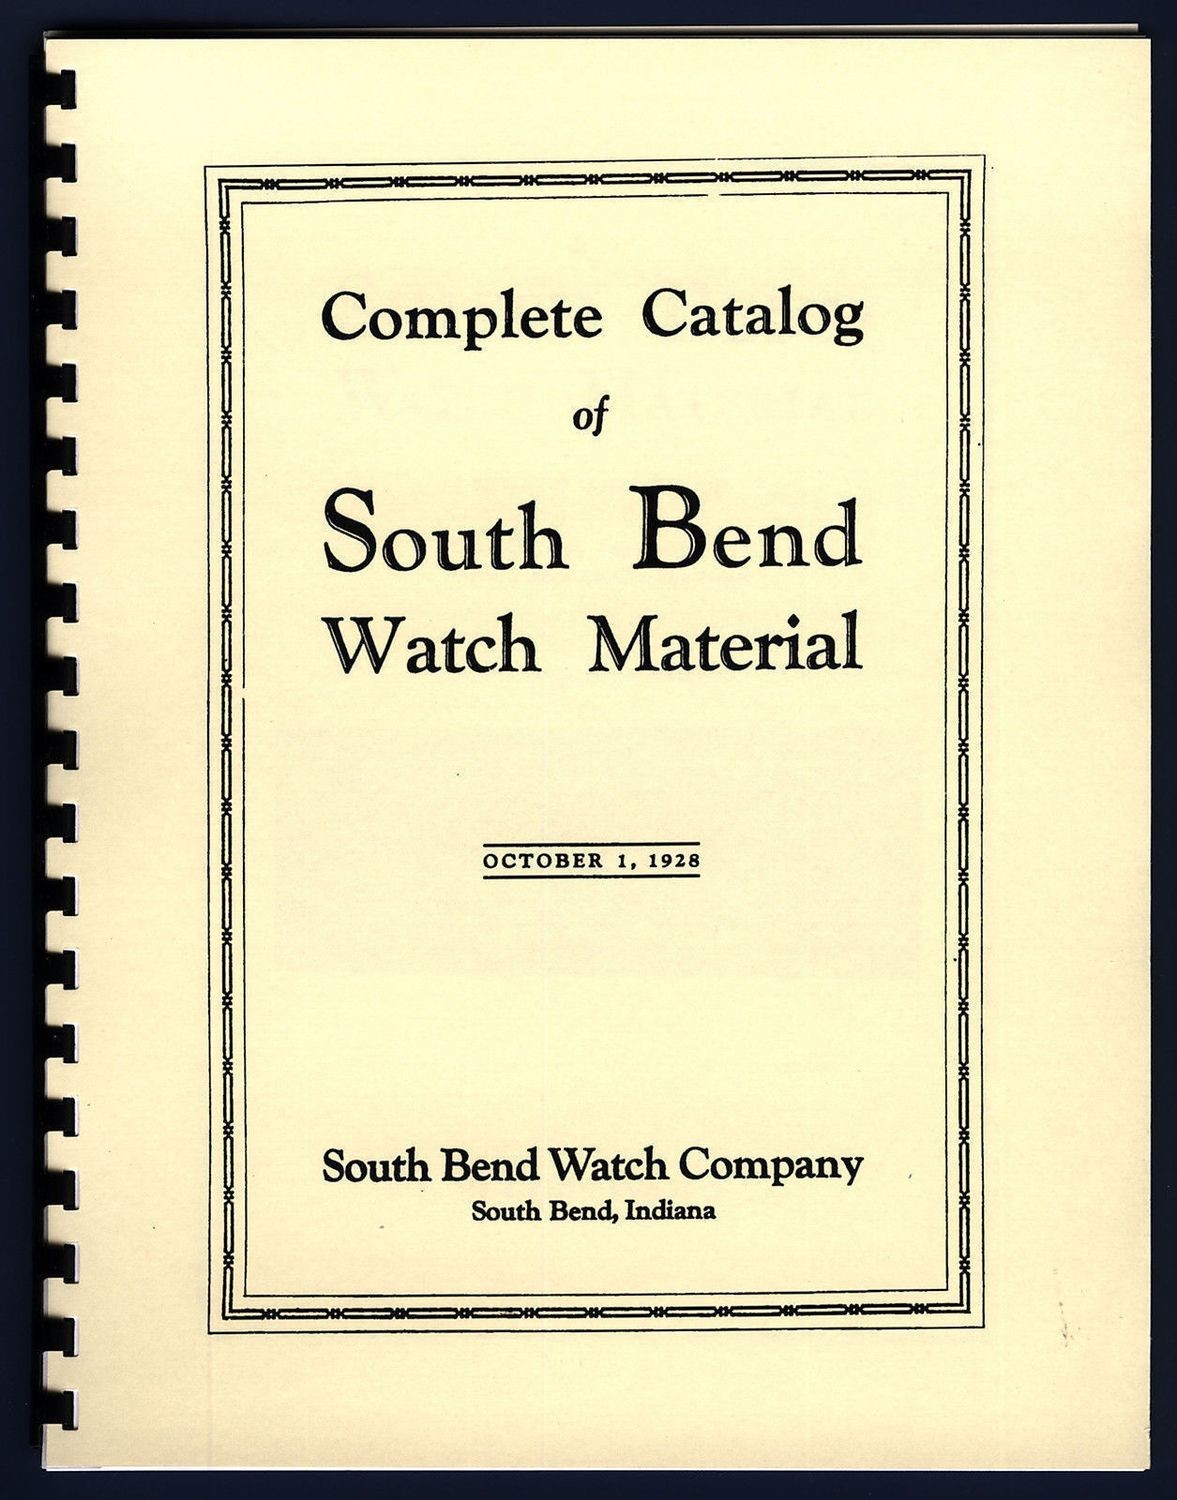 South Bend Watch Material Catalog Oct 1928 - reprint